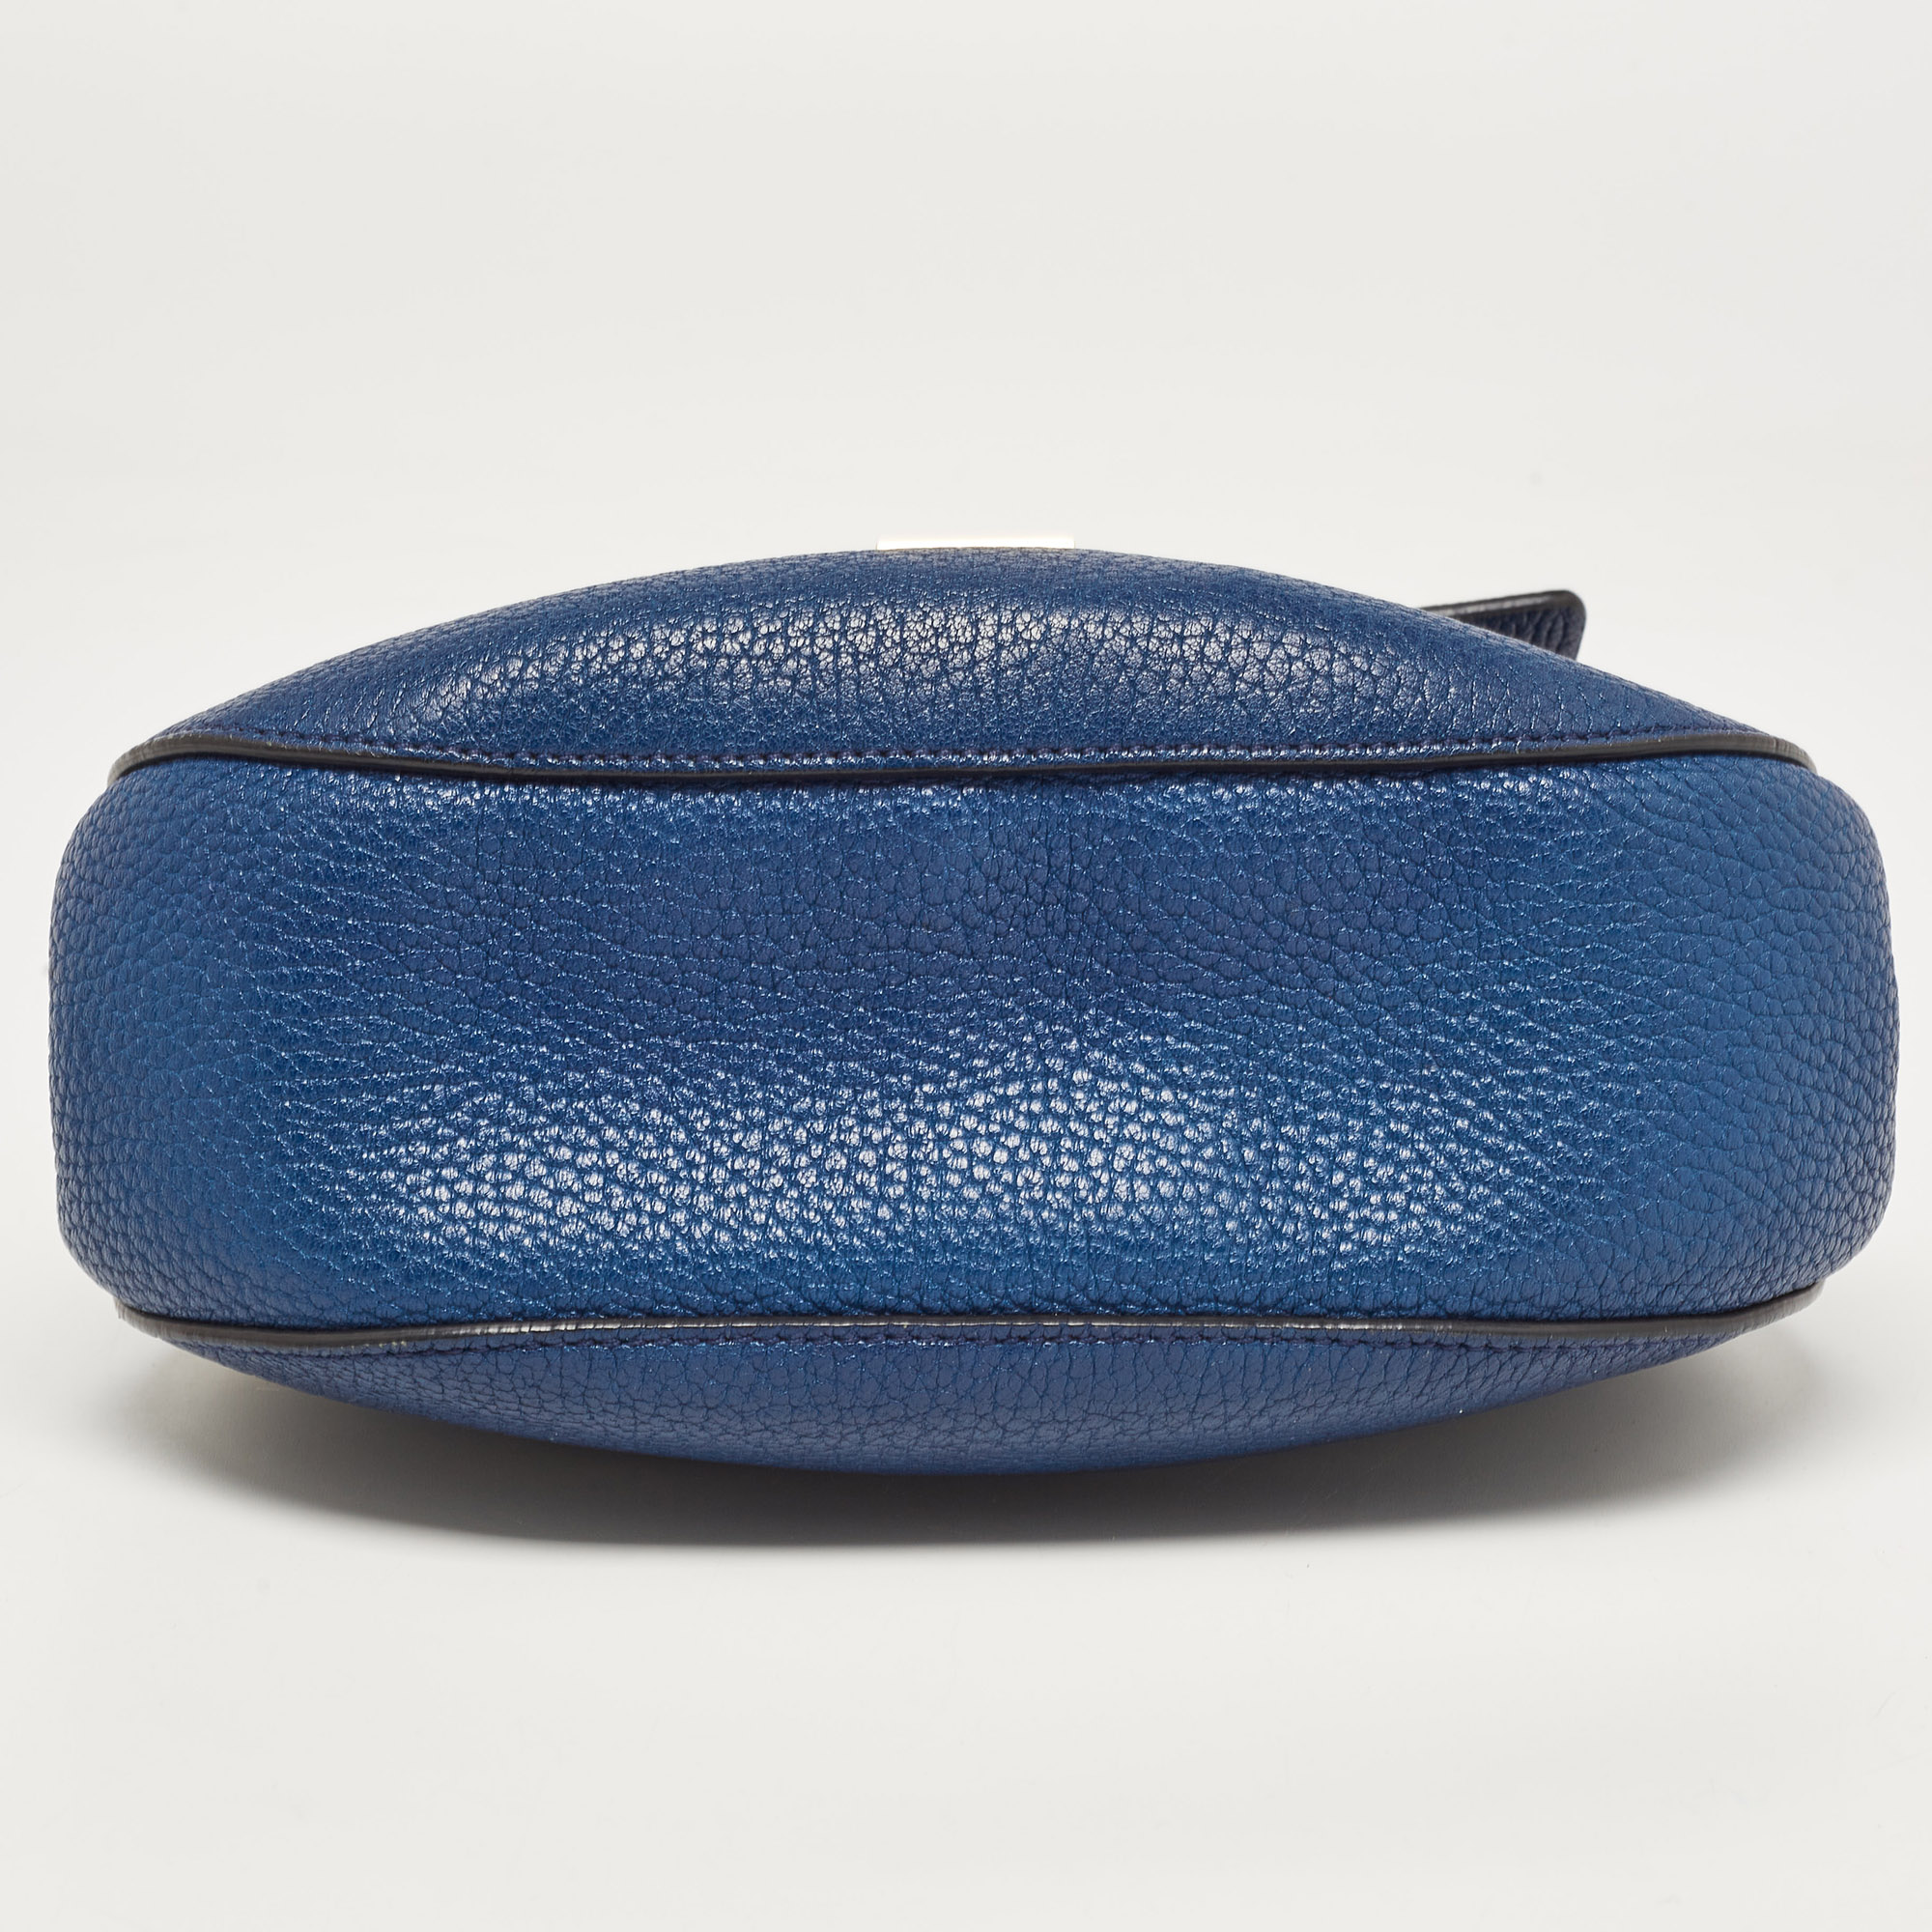 Chloe Blue Leather Medium Drew Shoulder Bag